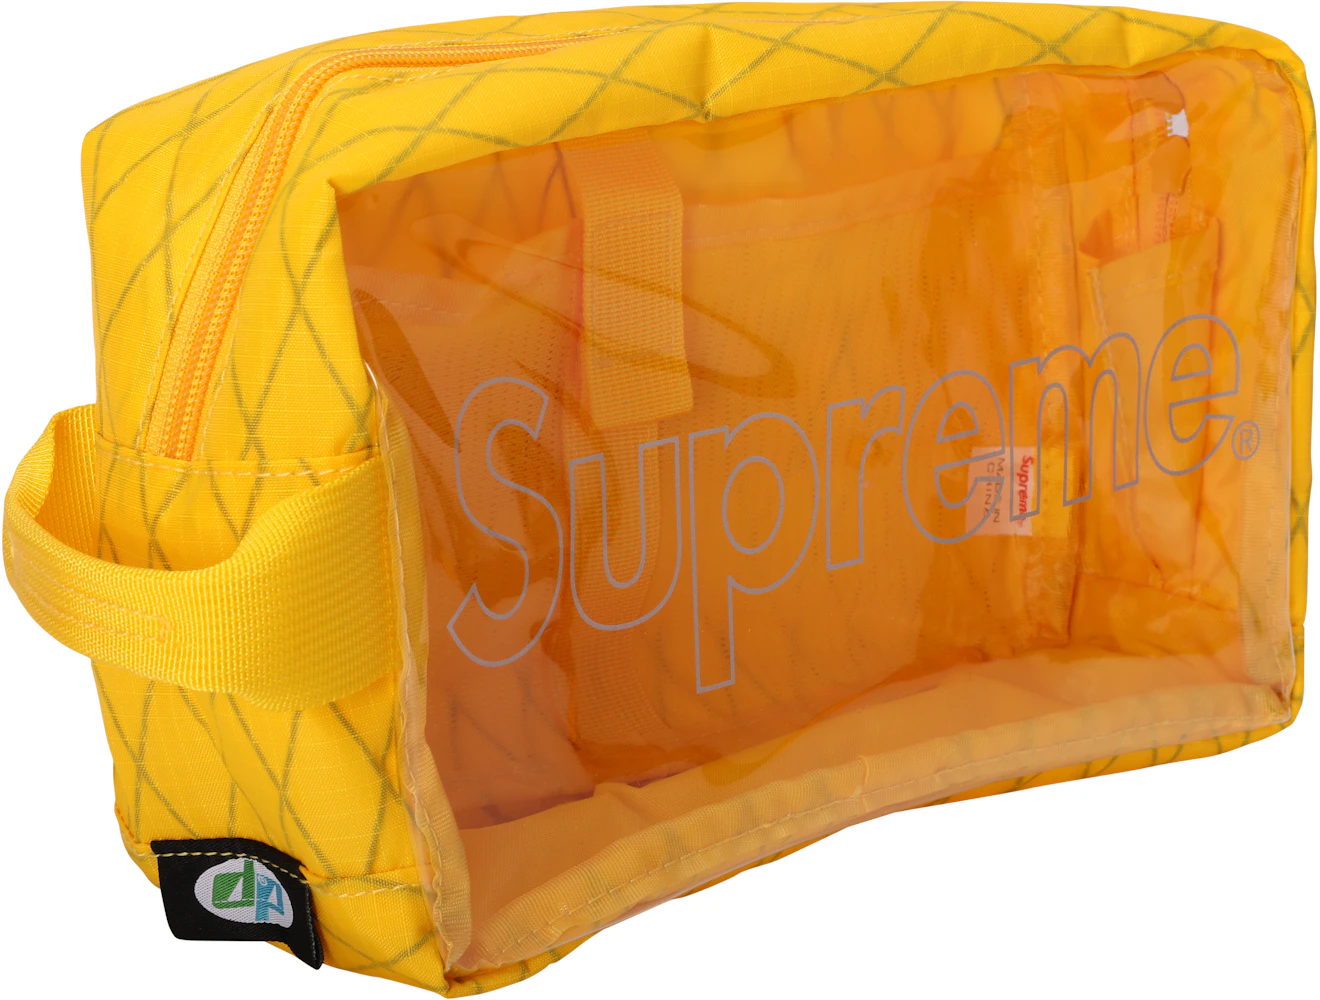 Supreme Duffle Bag (FW18) Yellow - FW18 - US